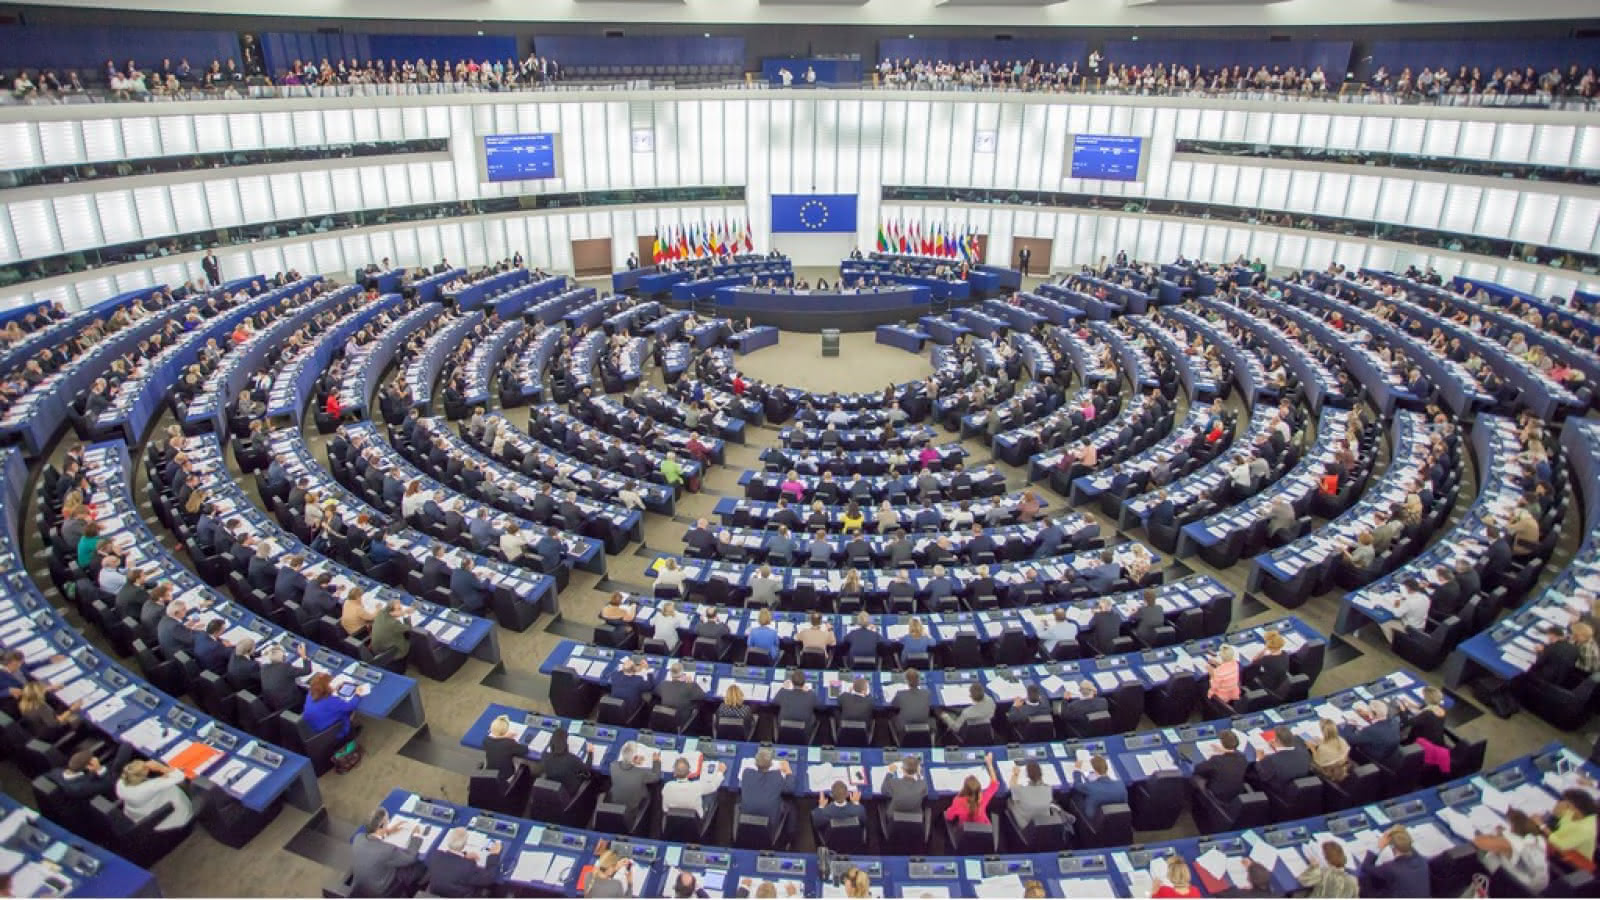 Siège du parlement européen.jpg